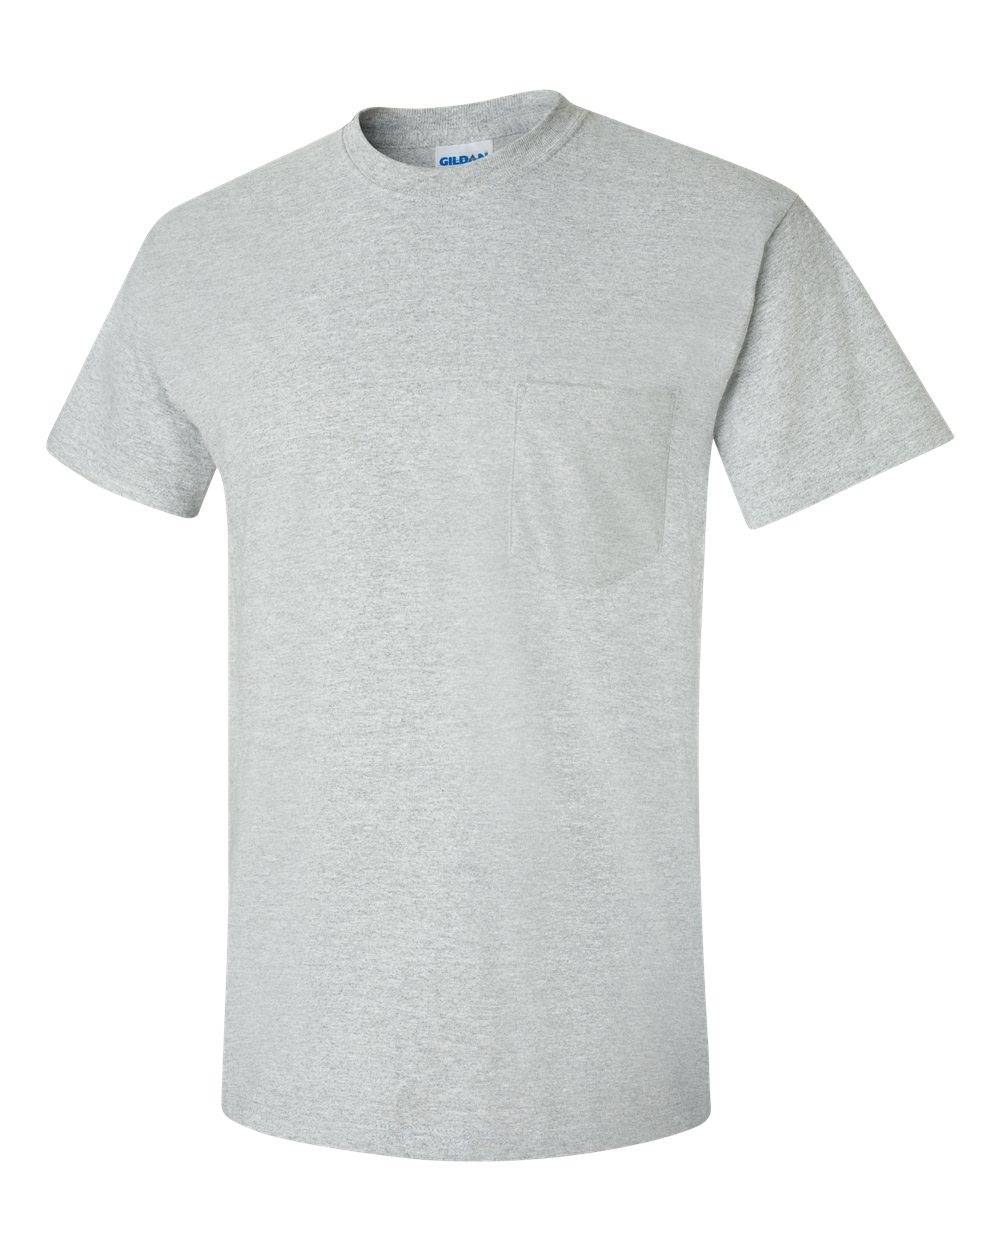 Download Gildan Mens Short Sleeve Blank Ultra Cotton T Shirt with a ...